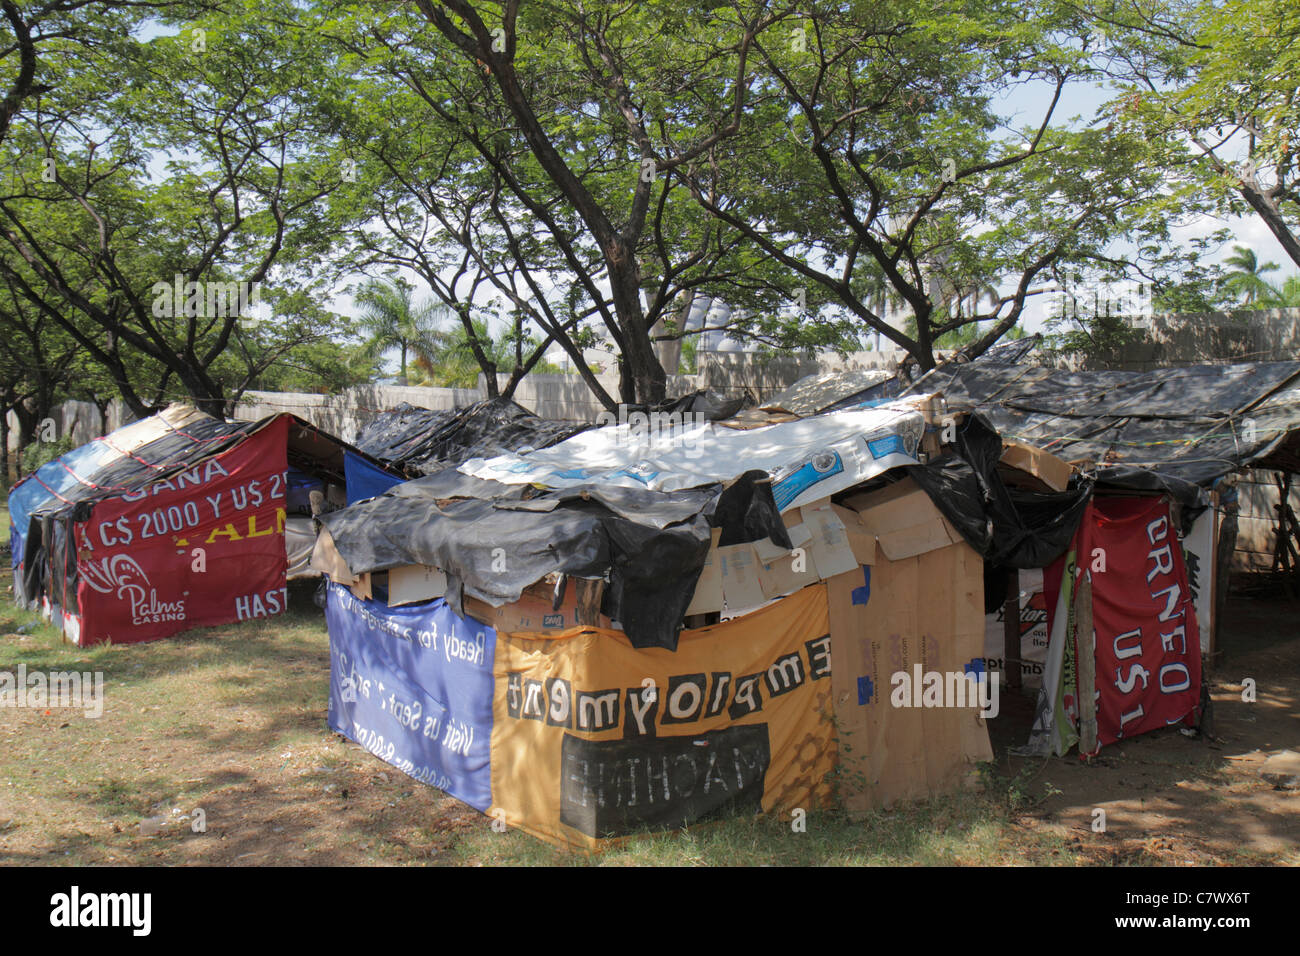 Managua Nicaragua,Avenida Simon Bolivar,protest,squatters,cardboard house,huts,shacks,corporate social responsibility,Grupo Pellas,sugar producer,expo Stock Photo